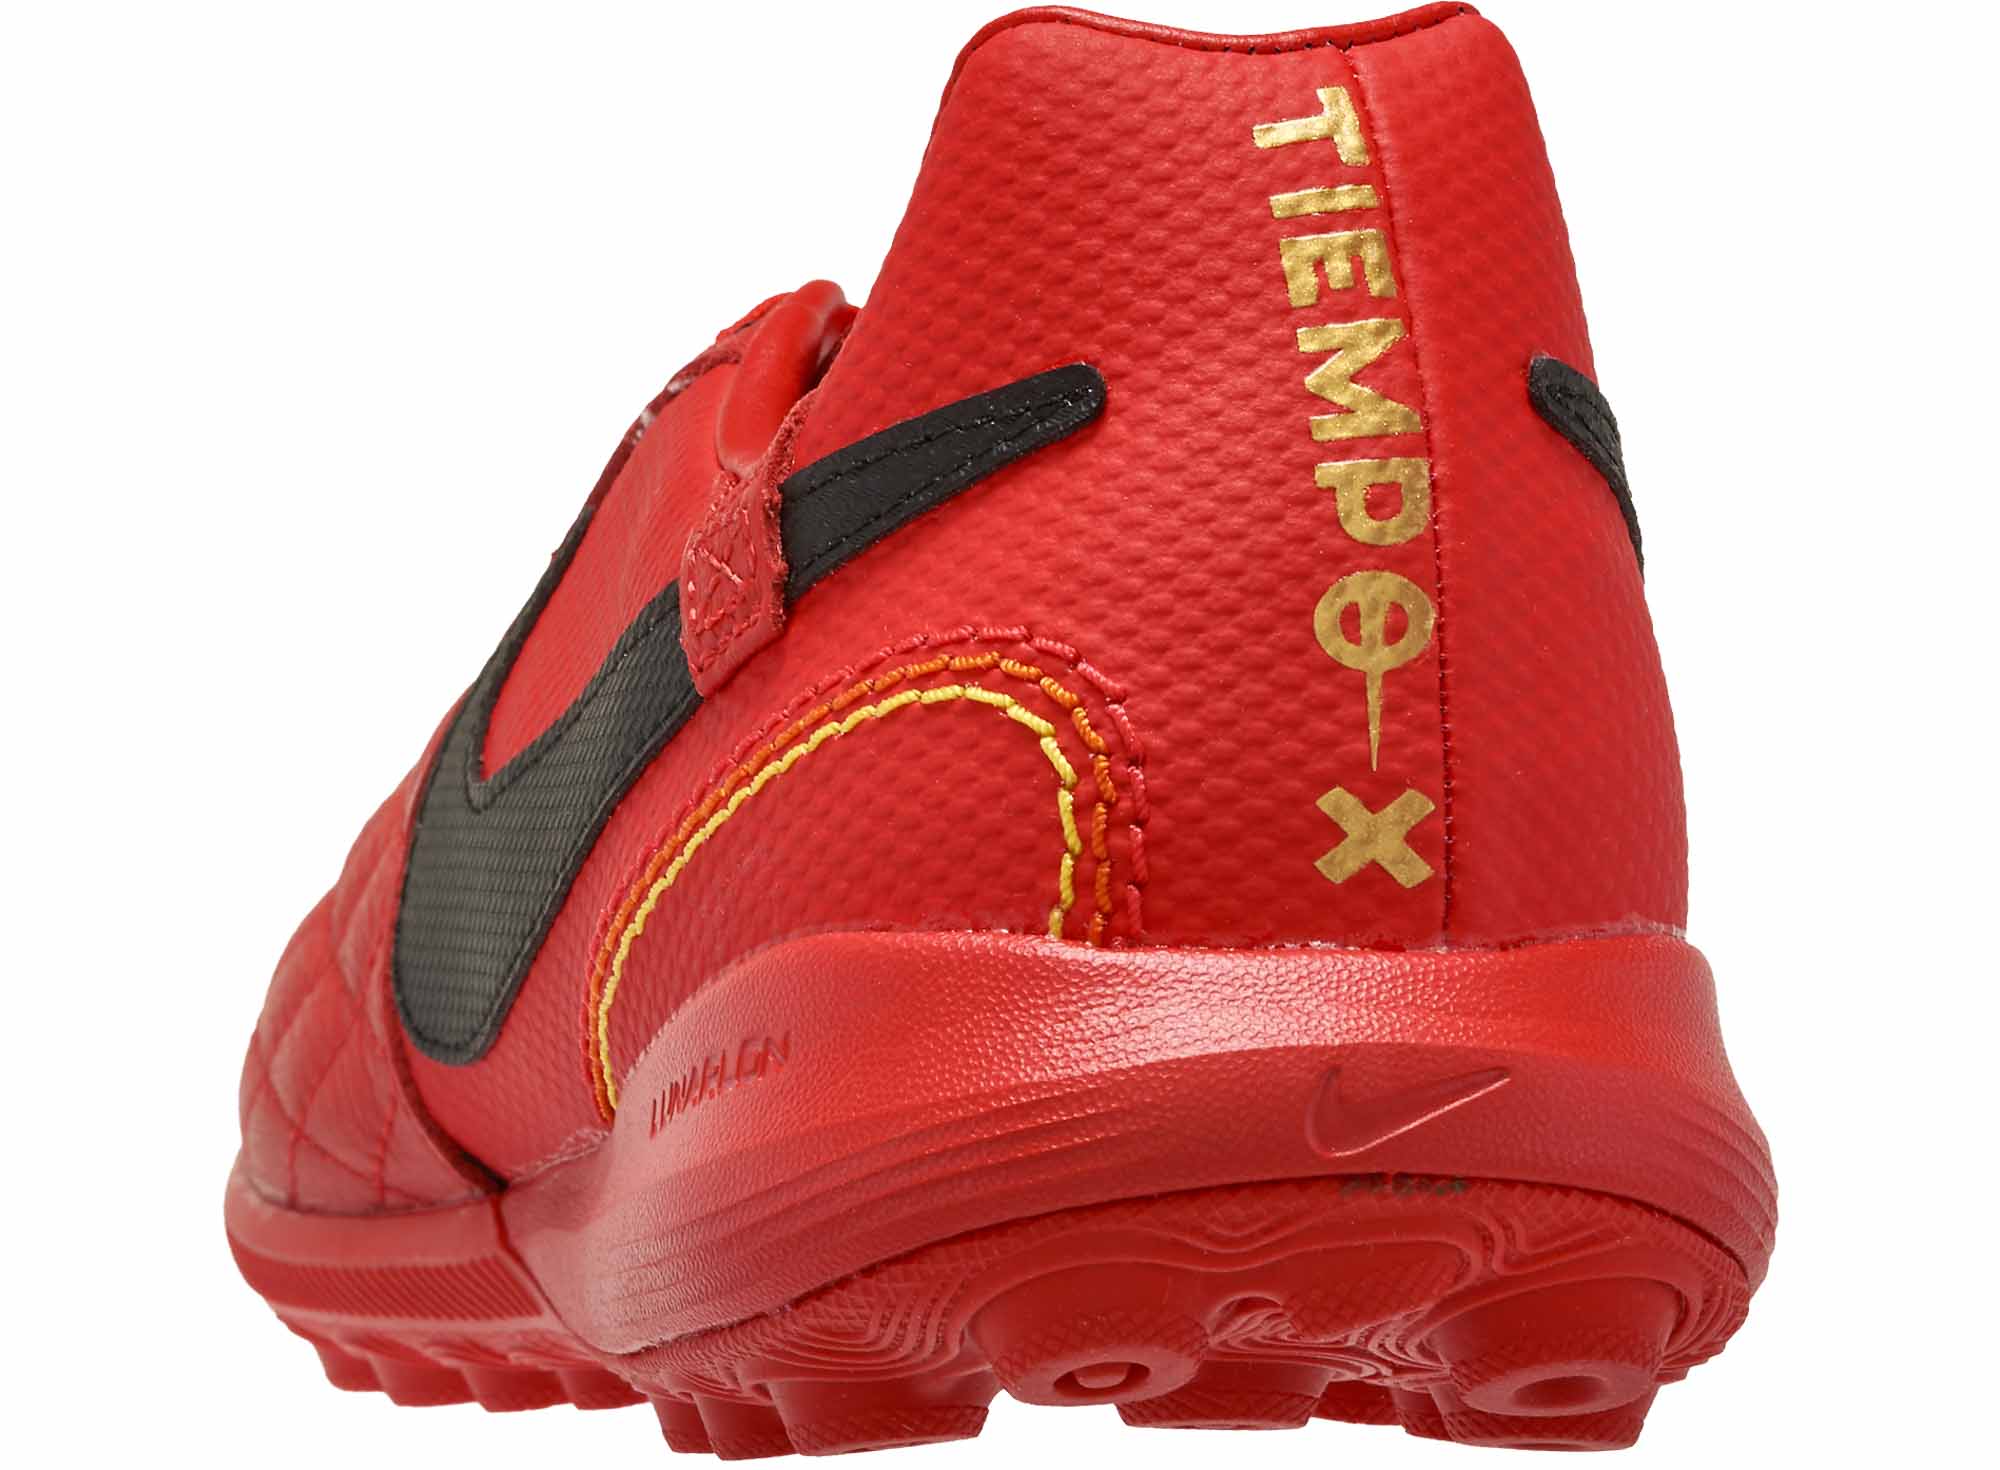 Nike 10R TiempoX Lunar Legend 7 Pro - University Red/Black/Metallic Gold - Soccer Master